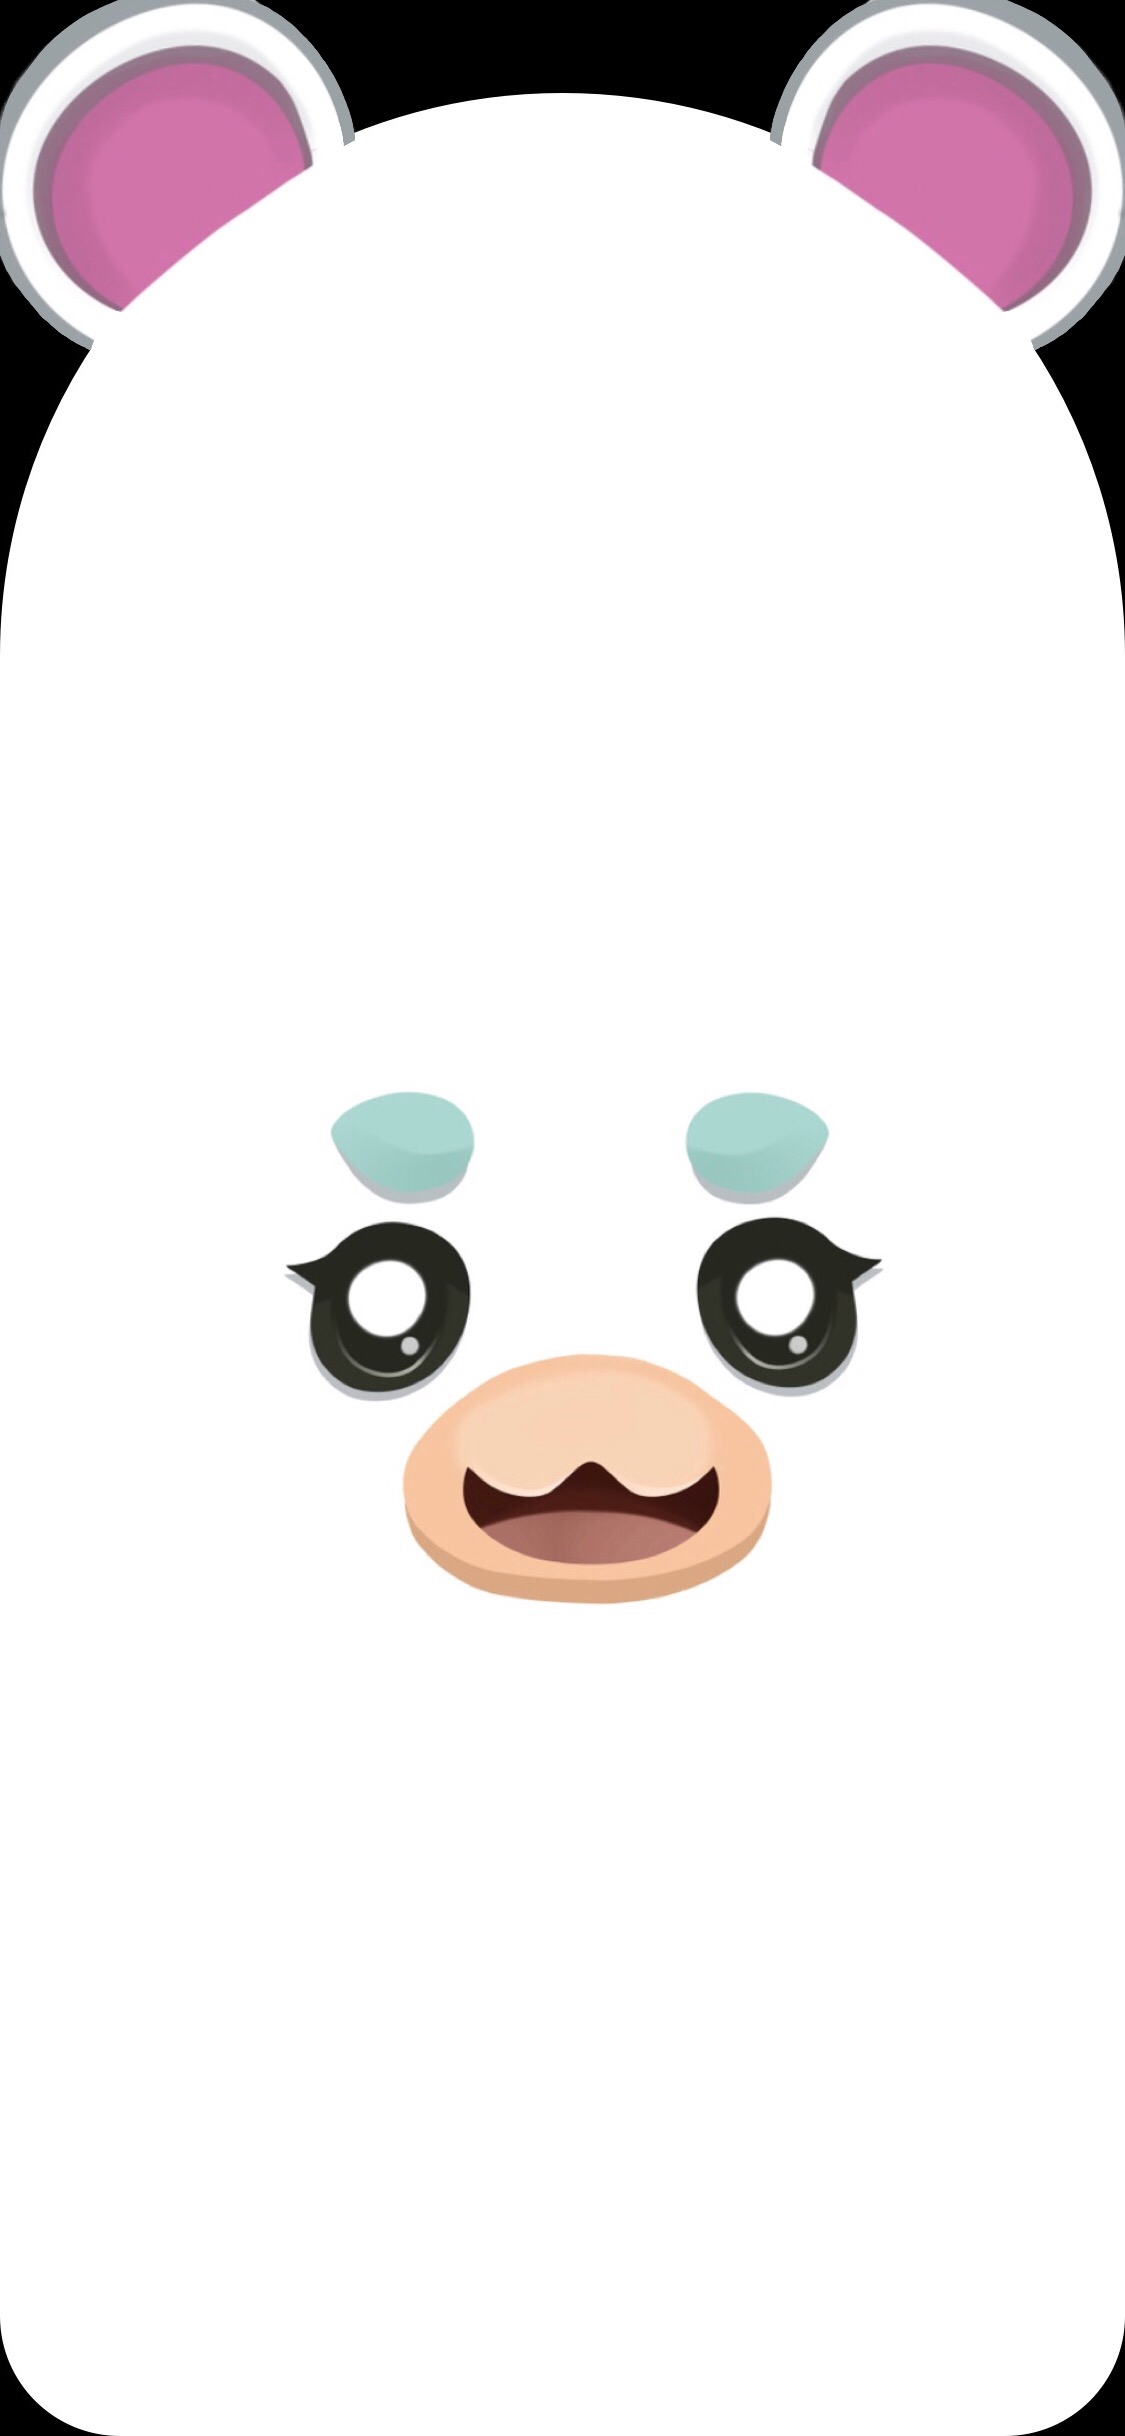 Animal Crossing Flurry Wallpaper Iphone X - Cartoon - HD Wallpaper 